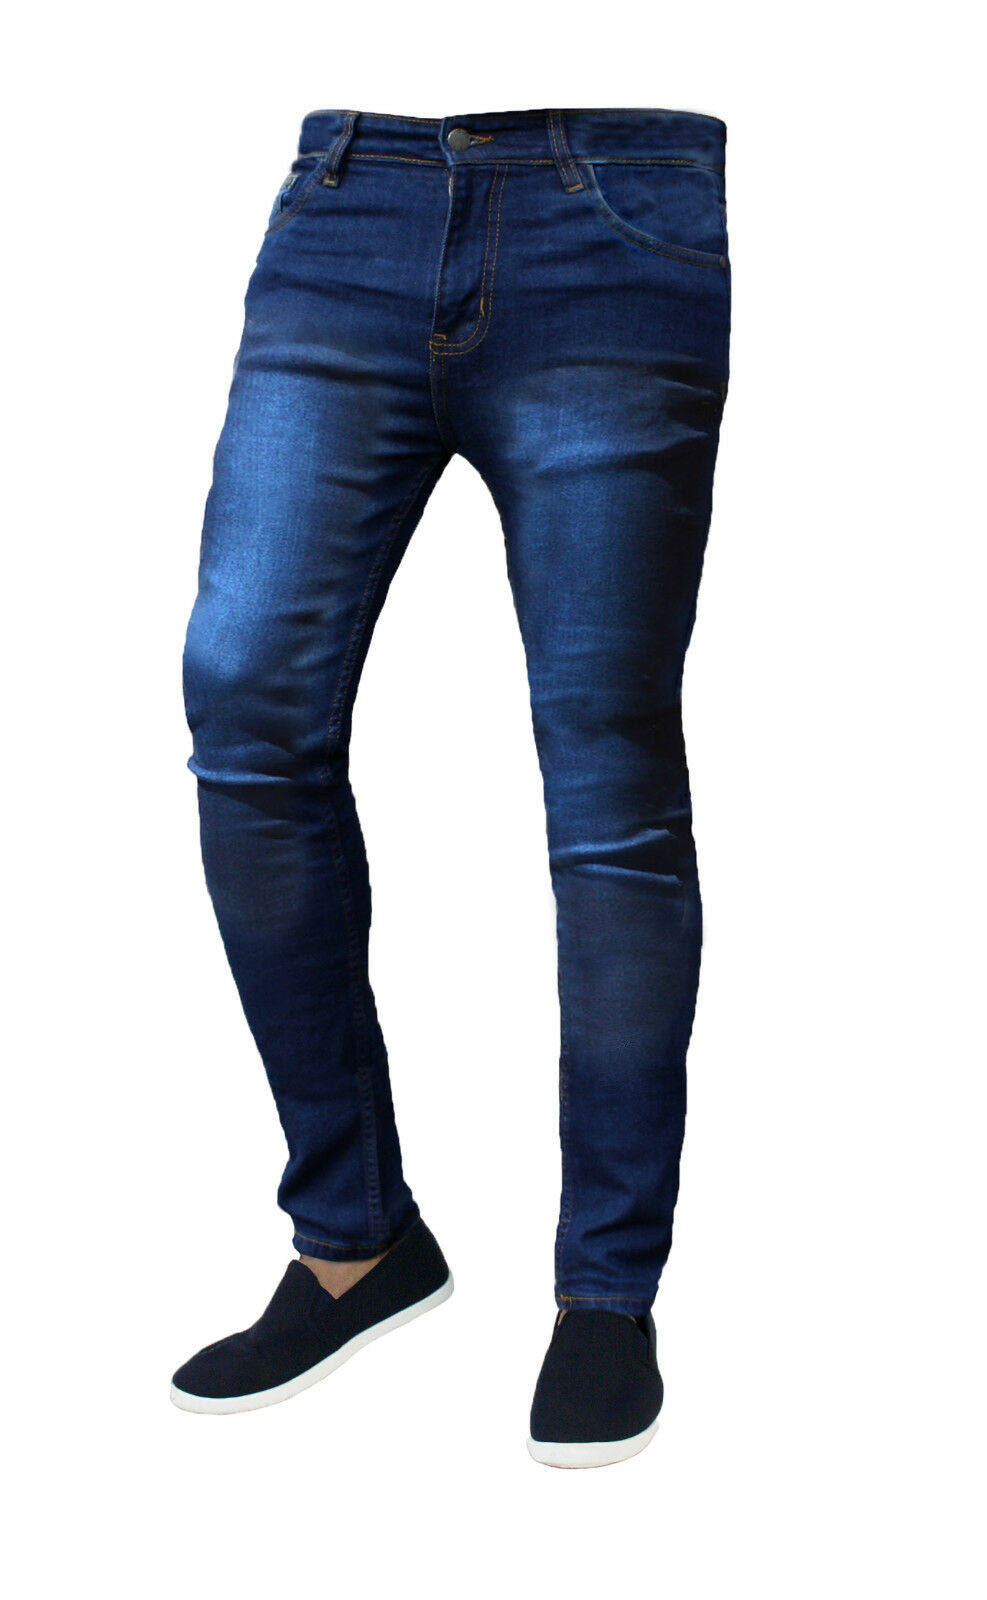 Stretch skinny slim-fit jeans pants